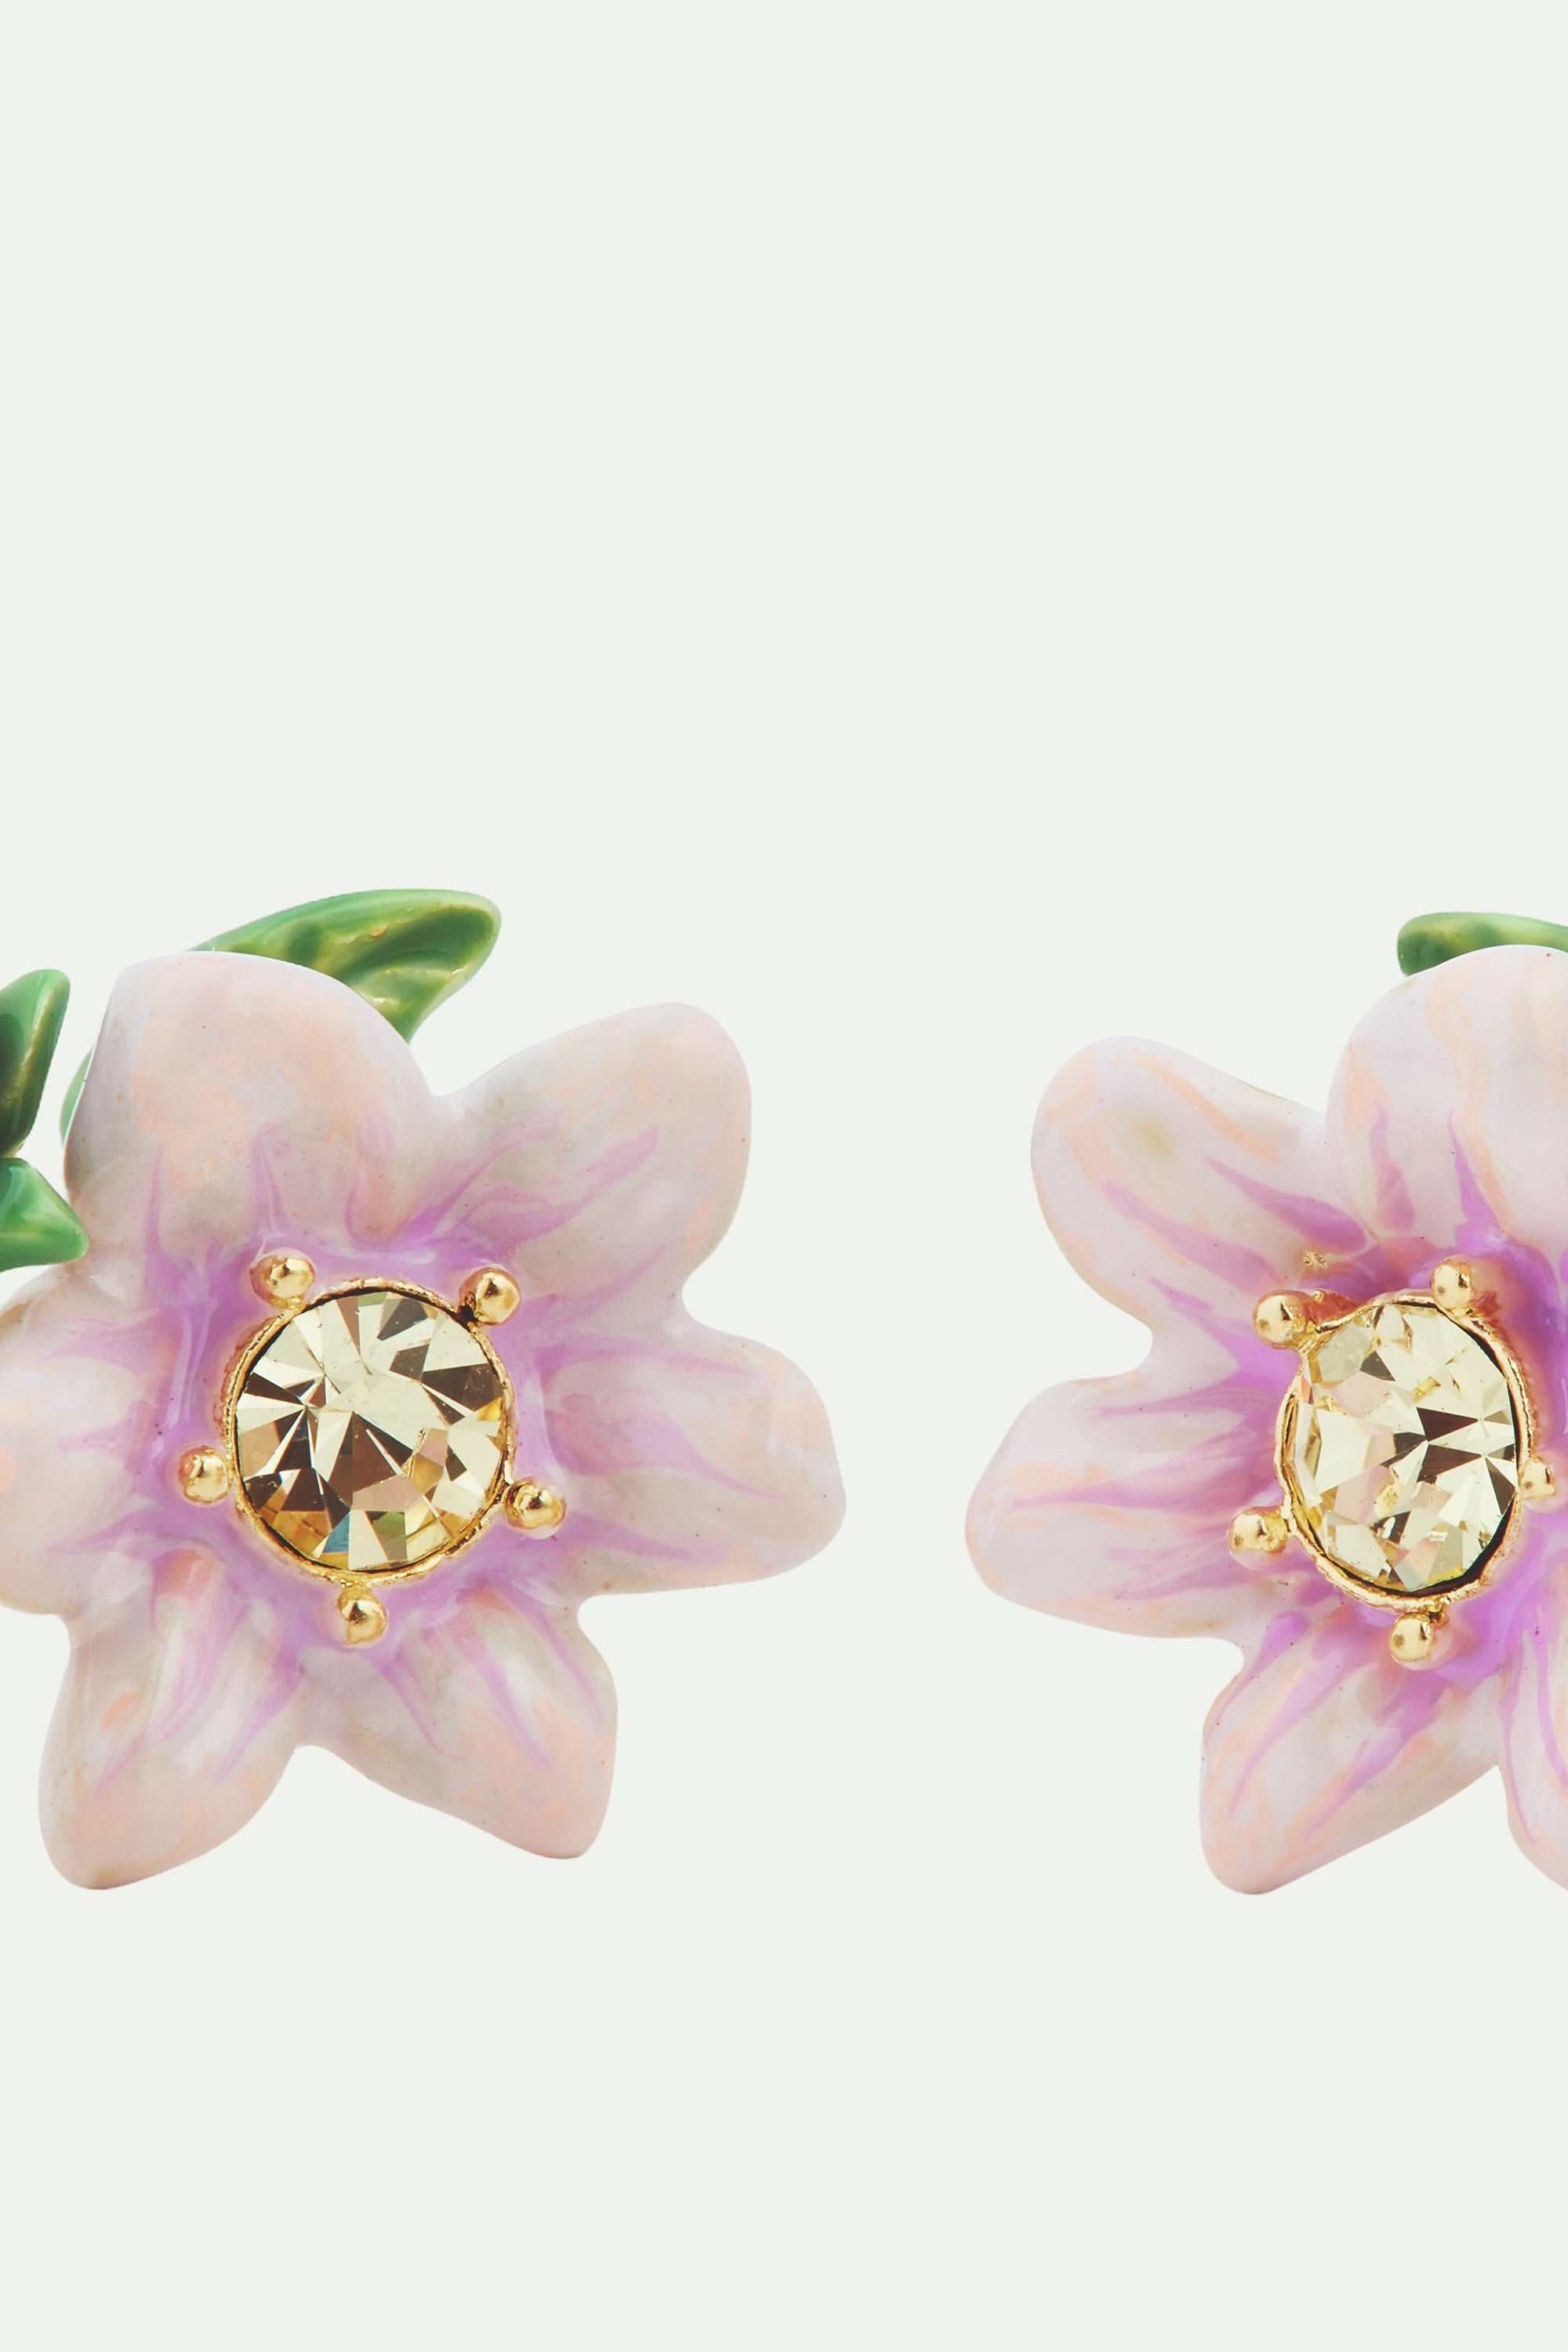 Aubergine and flower post earrings